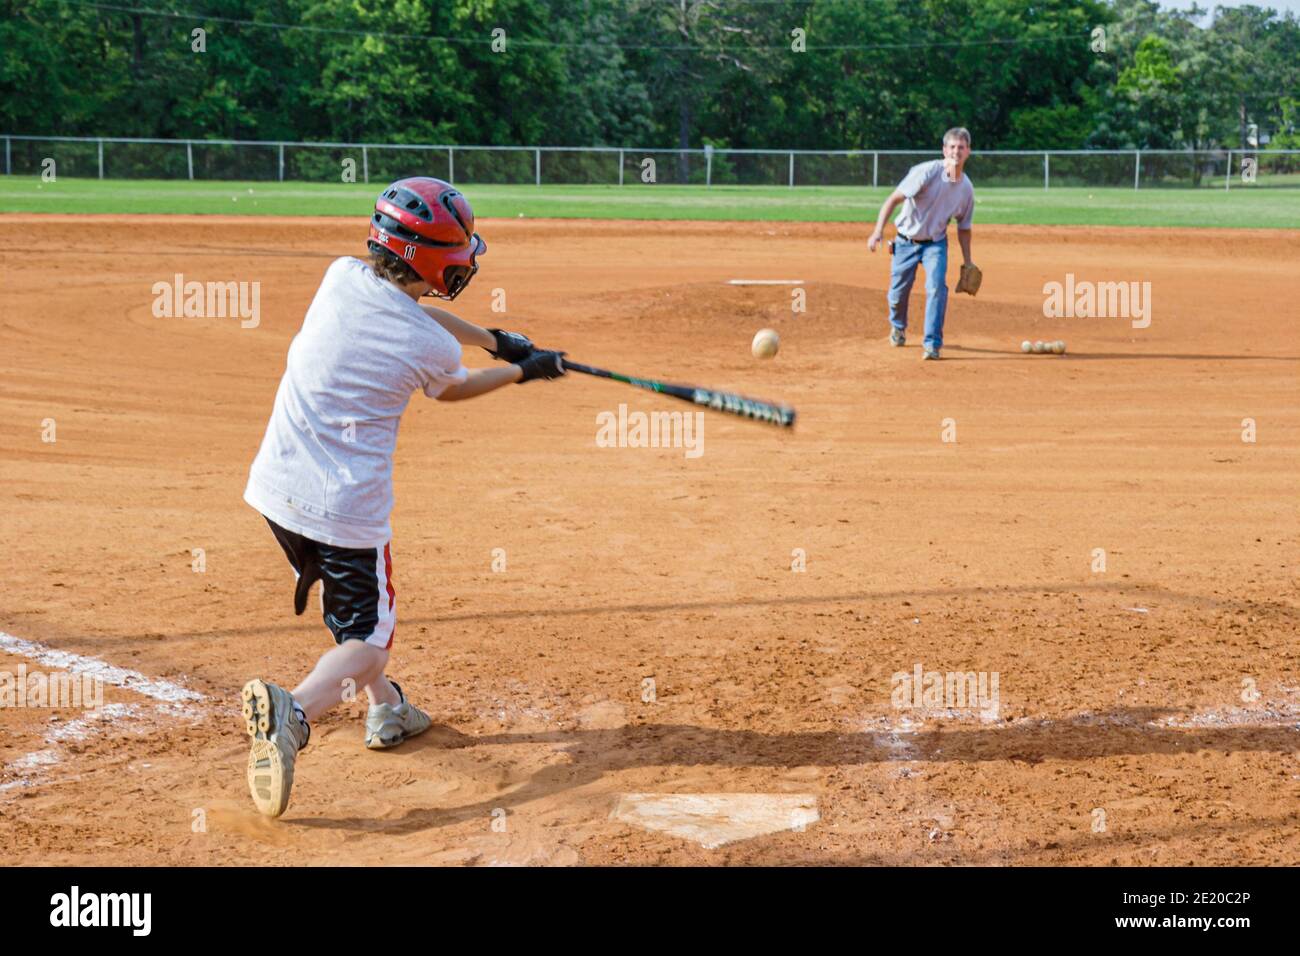 Alabama Dothan Westgate Park Baseball Hardy Field, padre pitch son hits bate bateo swings práctica hombre chico, Foto de stock